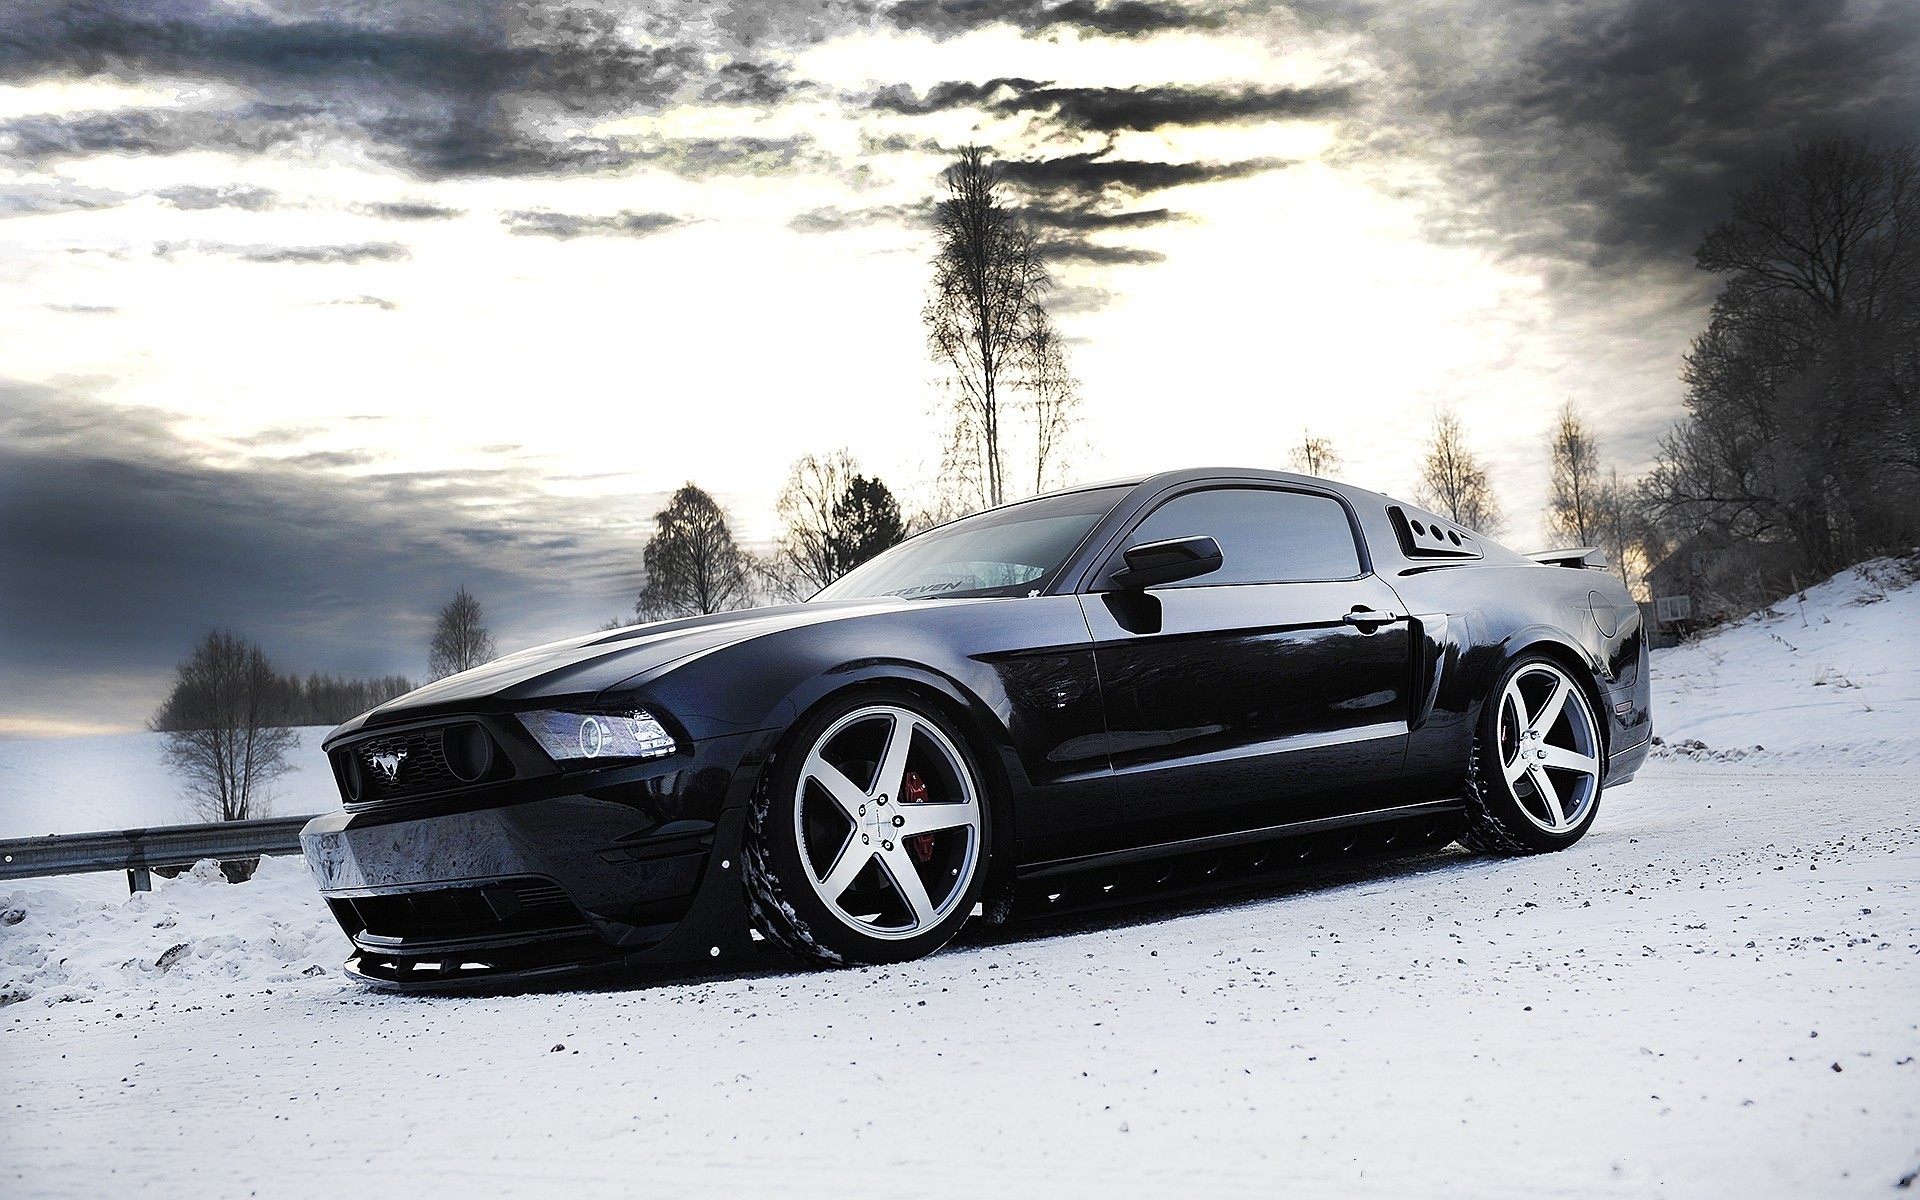 Ford Mustang, Tuning, Car, Snow, Winter Wallpaper